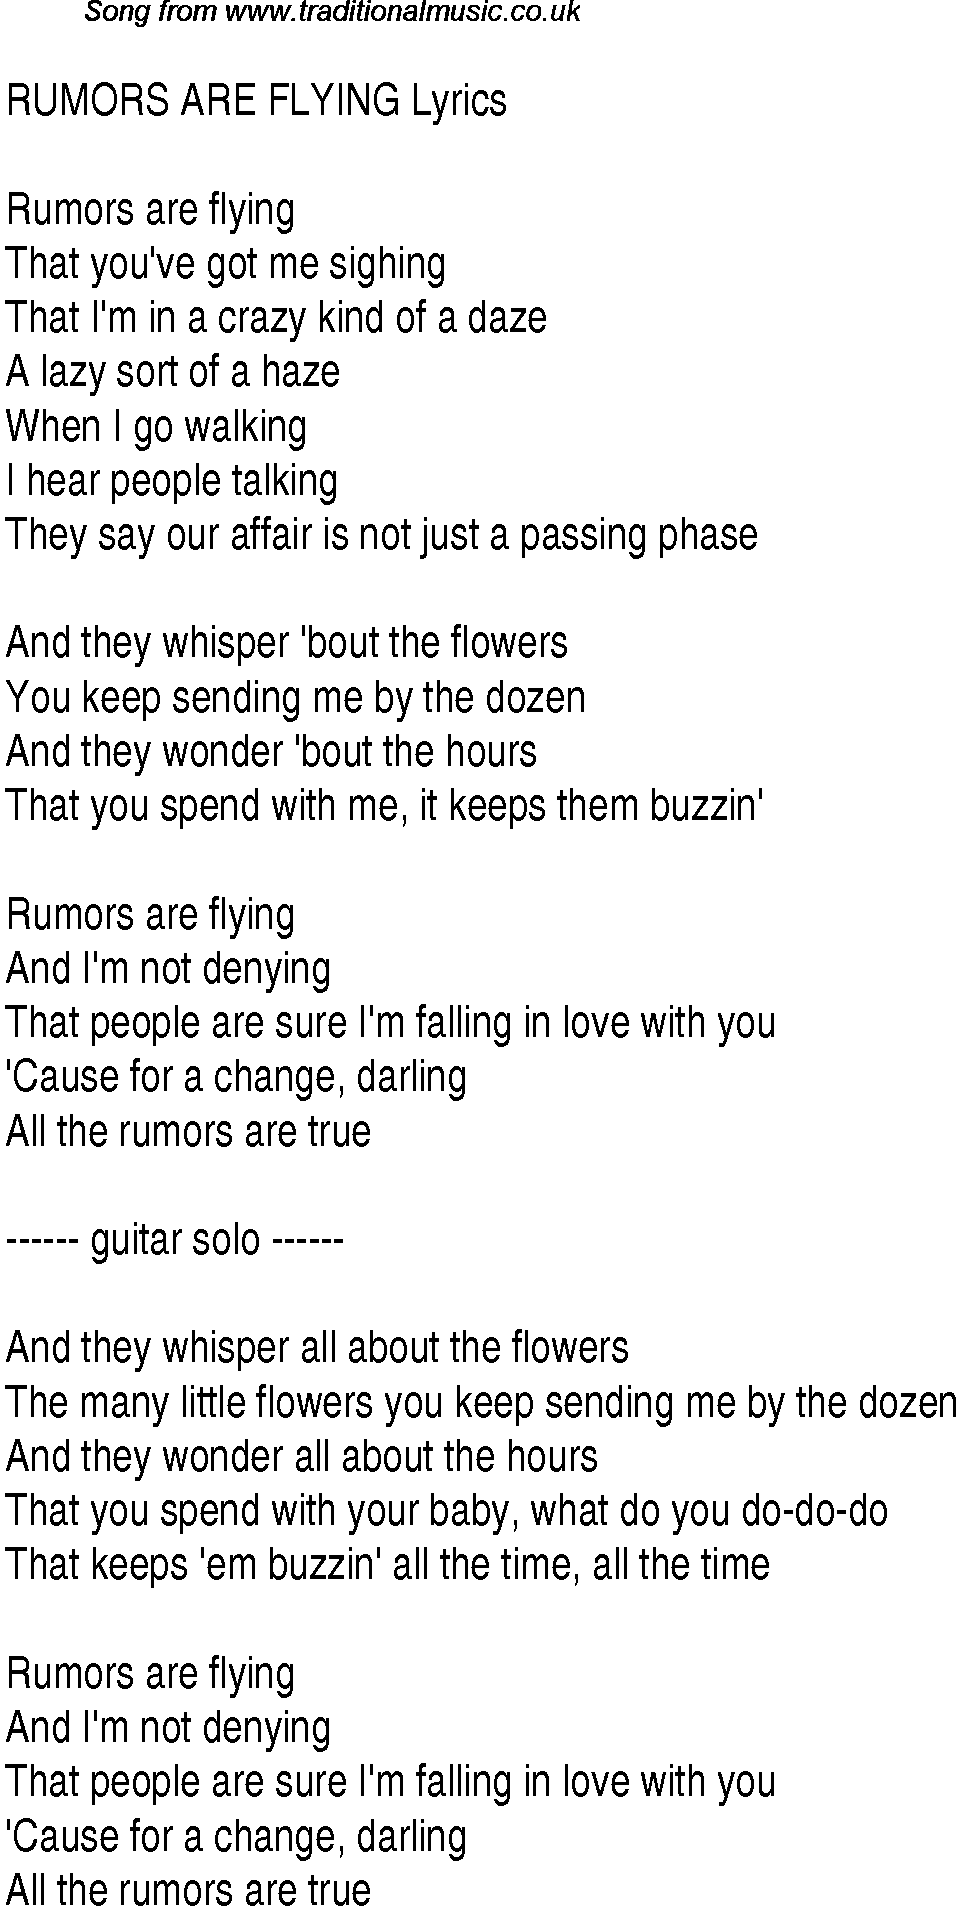 1940s top songs - lyrics for Rumors Are Flying(Andrews Sisters)